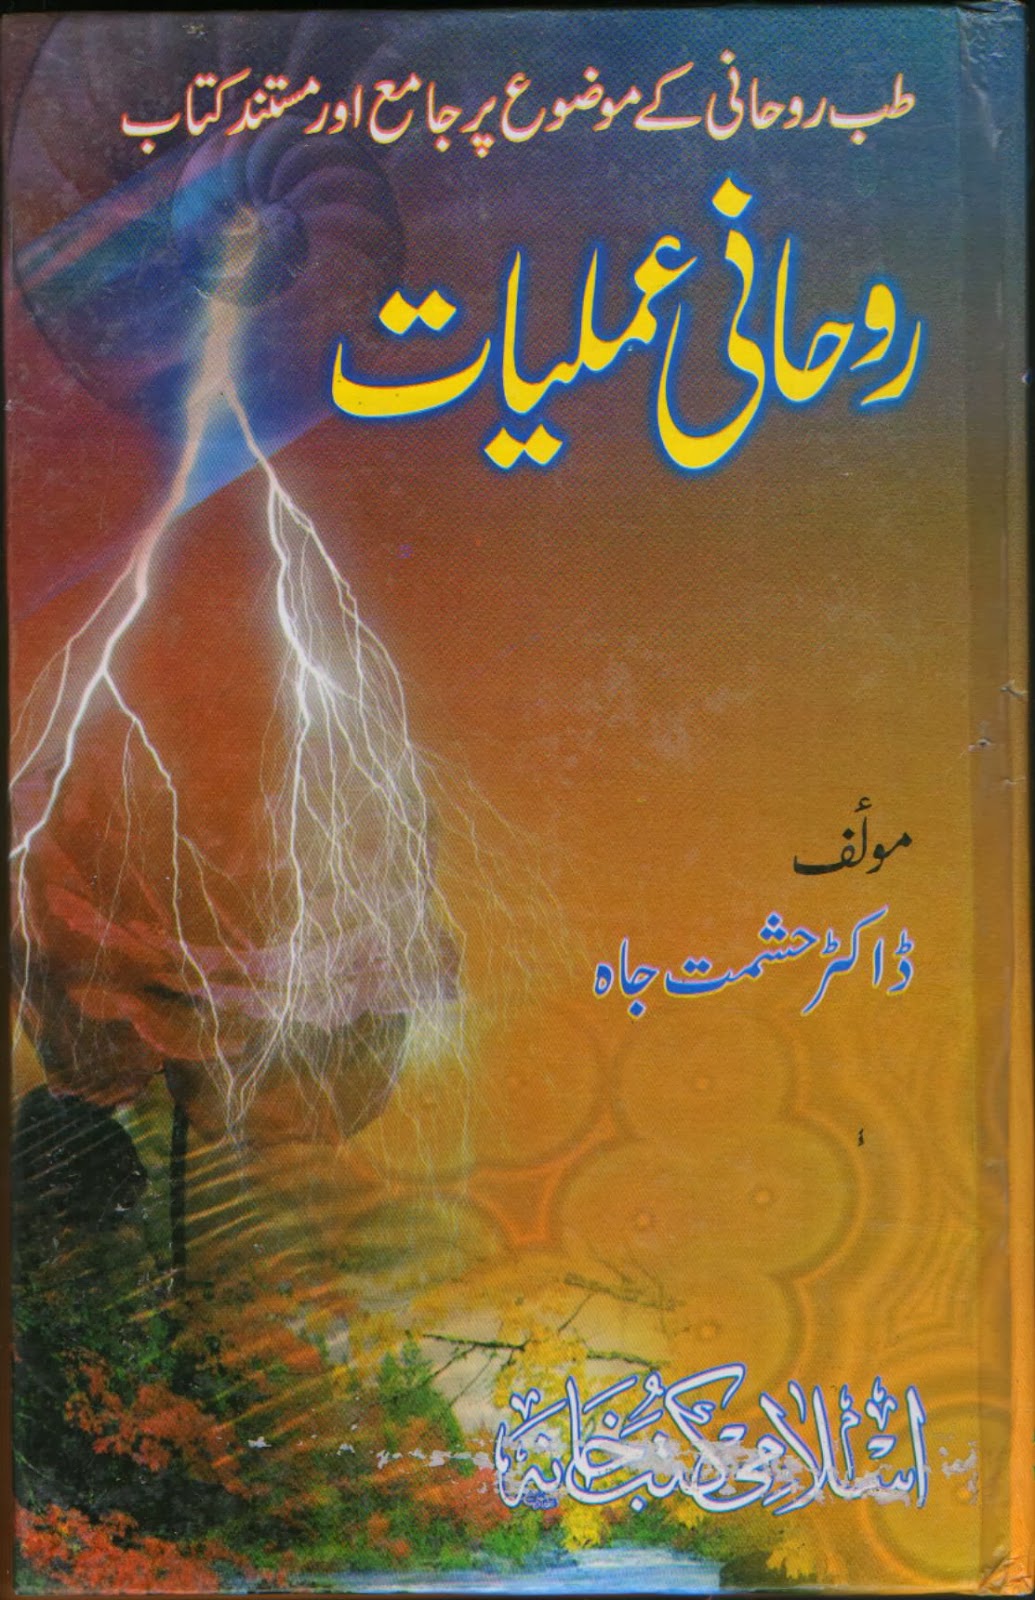 Amliyat book